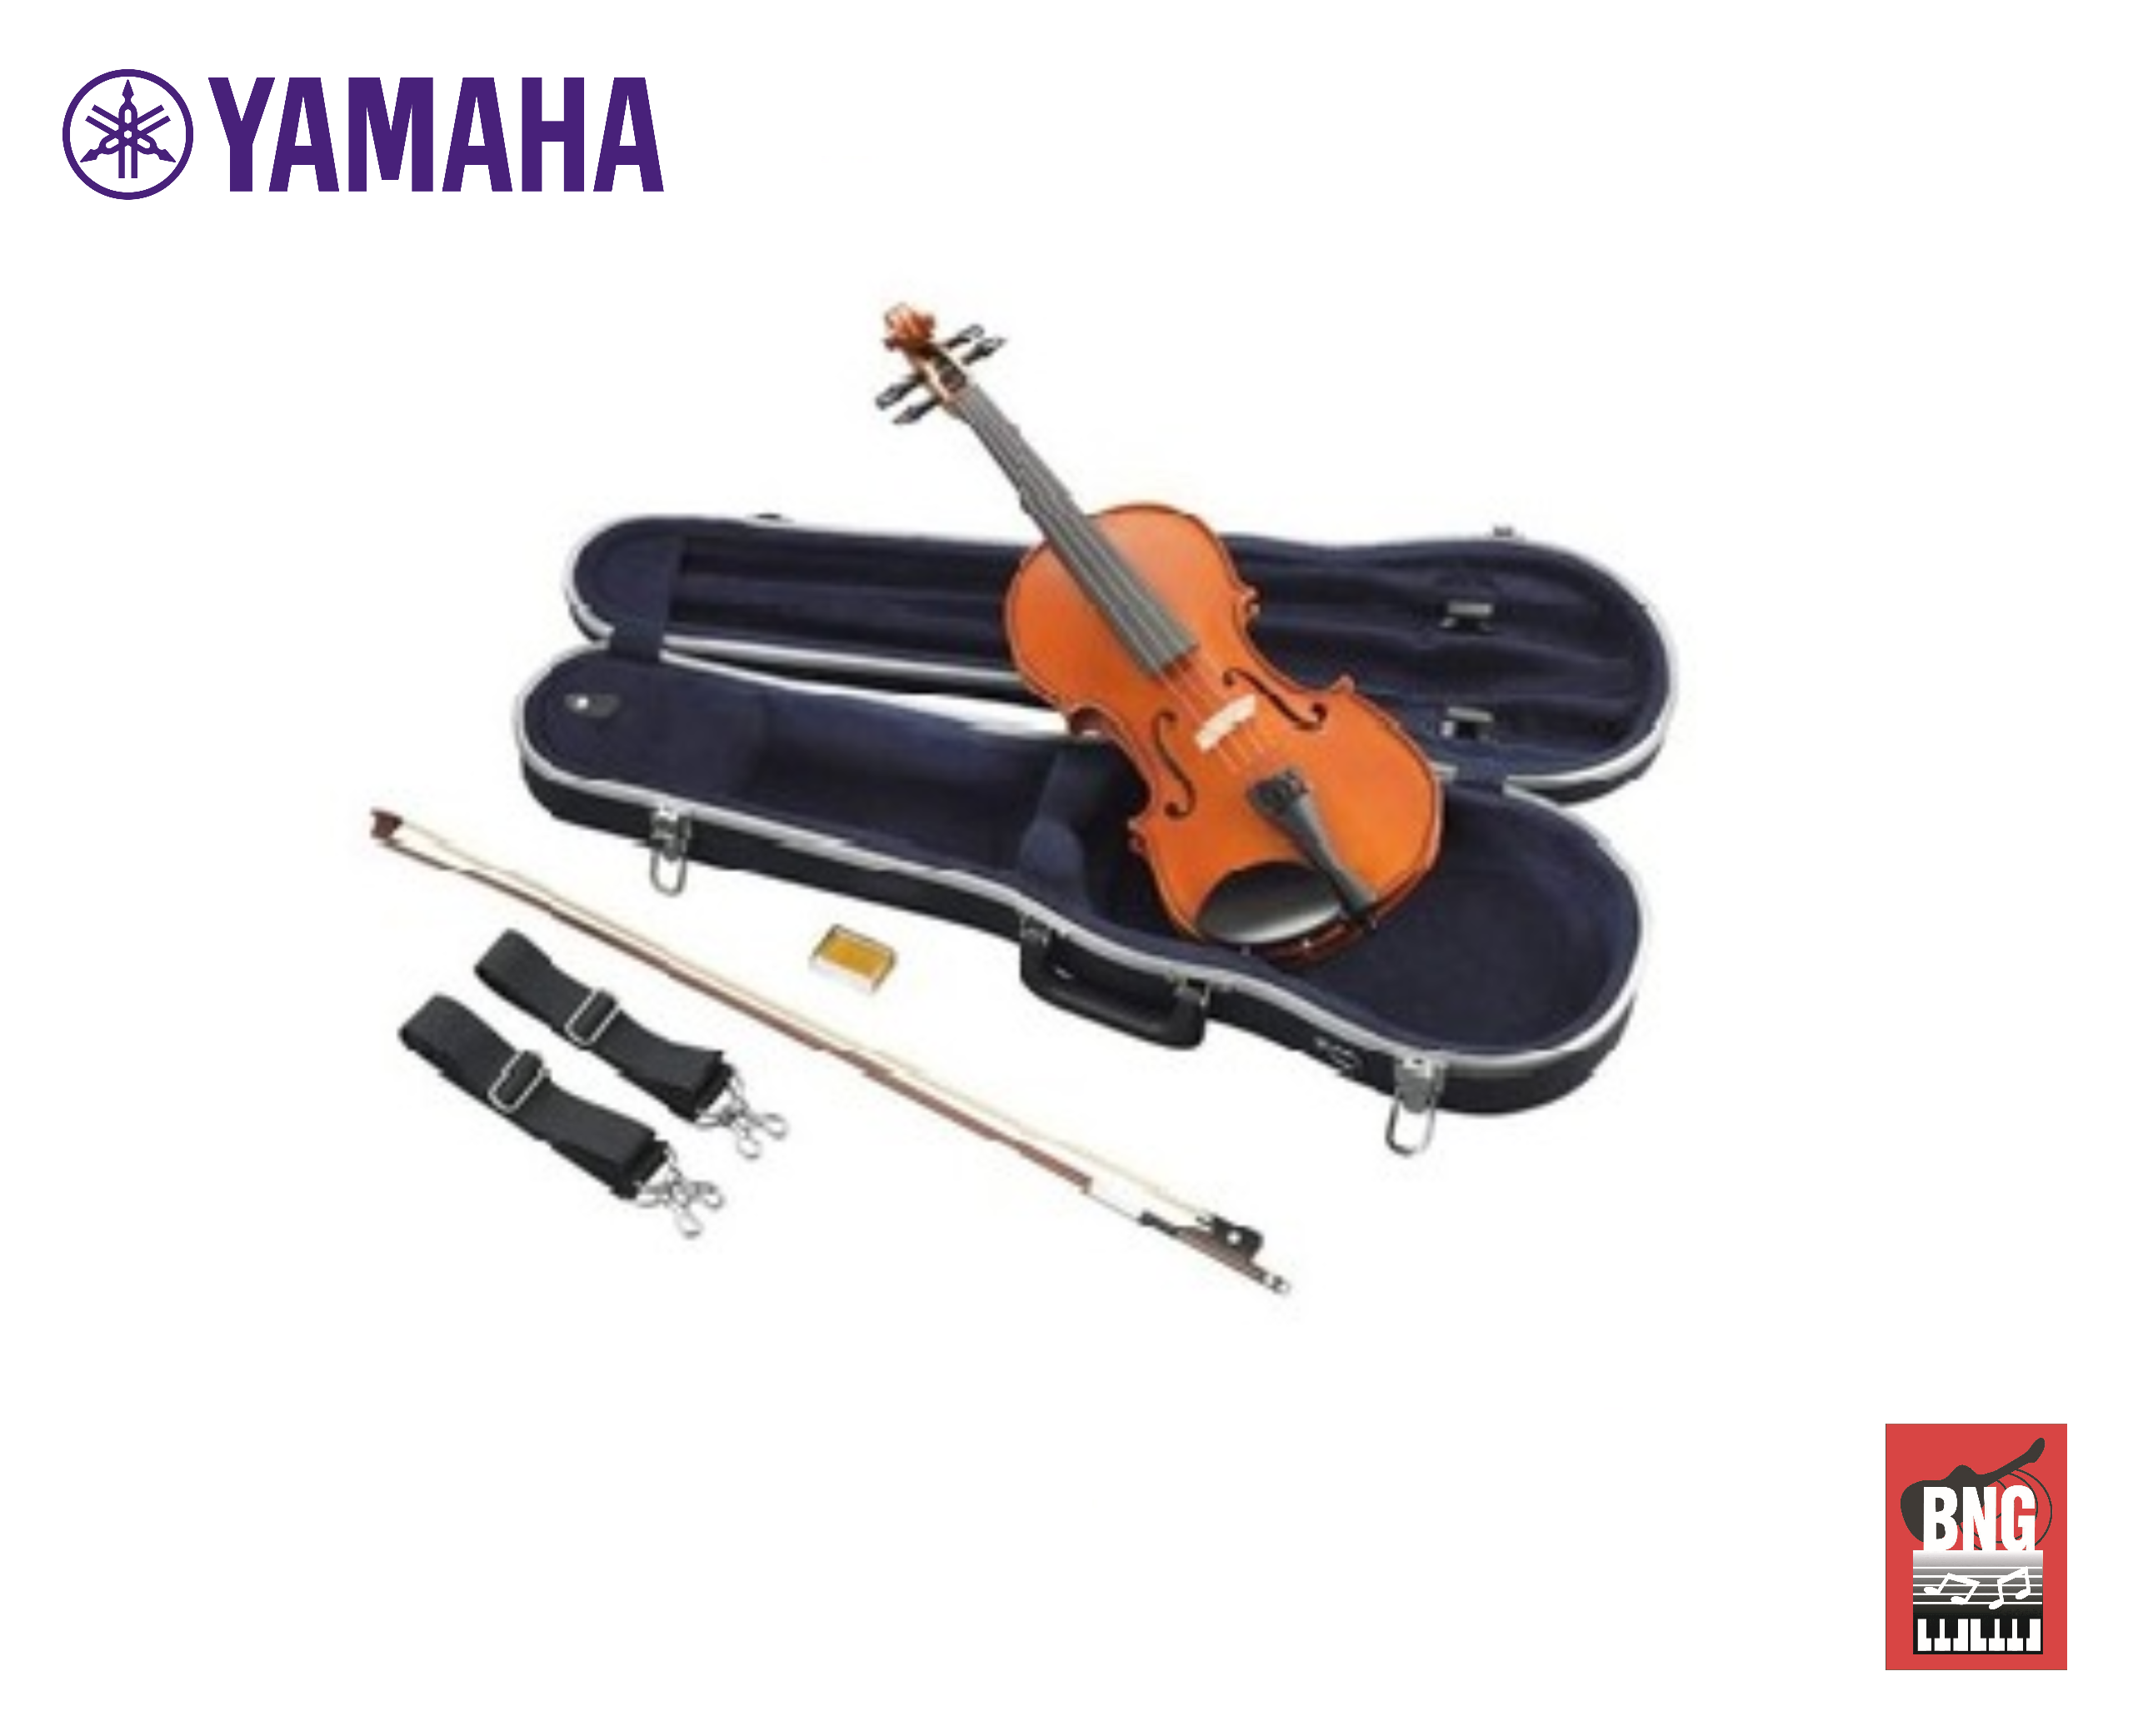 Yamaha Violin V5SA – ไวโอลินยามาฮ่า รุ่น Stradivarius งานละเอียด ปราณีตมากได้มาตราฐานต่างประเทศเลย ไม้หน้าแท้สปรูซ คอ ไม้หลังเมเปิ้ล เสียงกังวาล